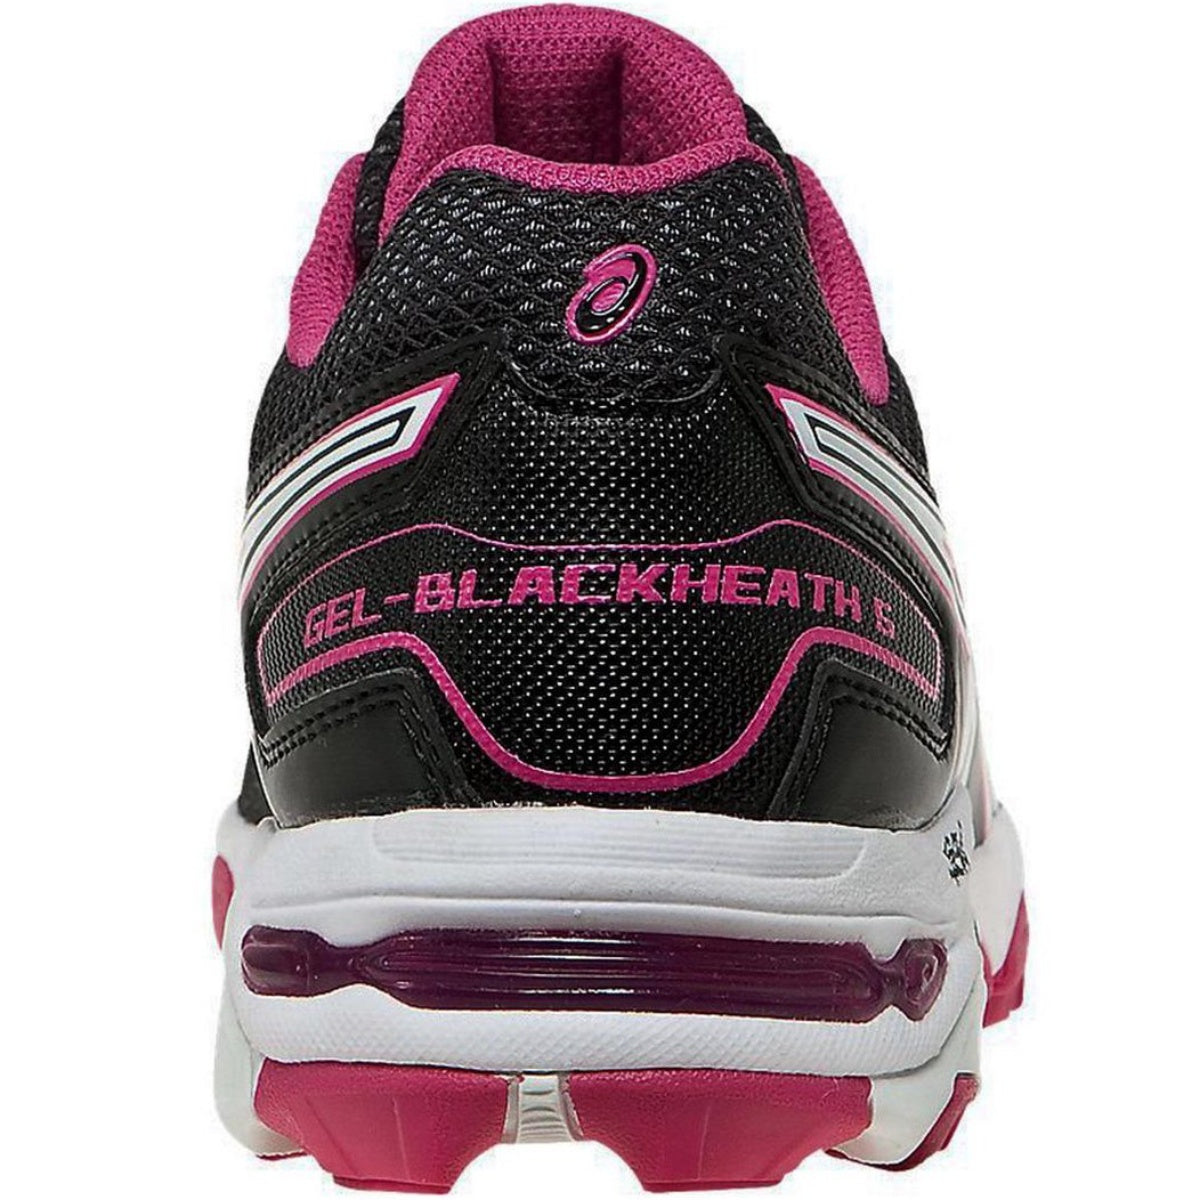 Asics Gel-Blackheath 5 dames hockeyschoen